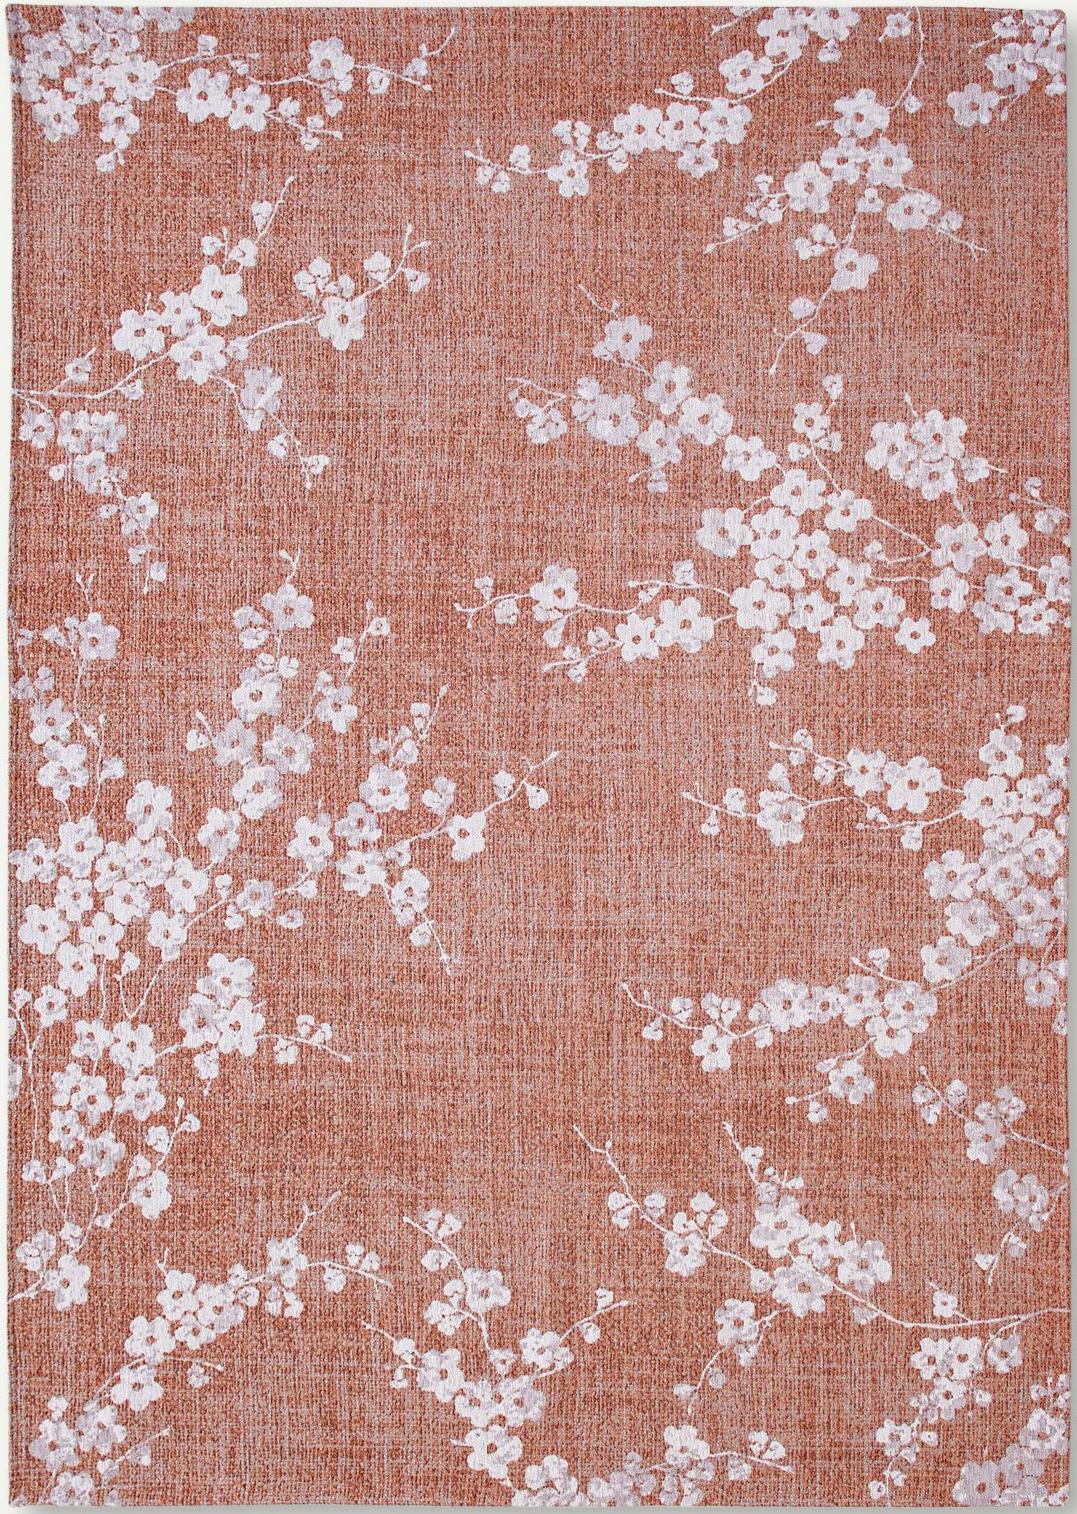 Copper Pink Modern Rug ☞ Size: 8' x 11' 2" (240 x 340 cm)